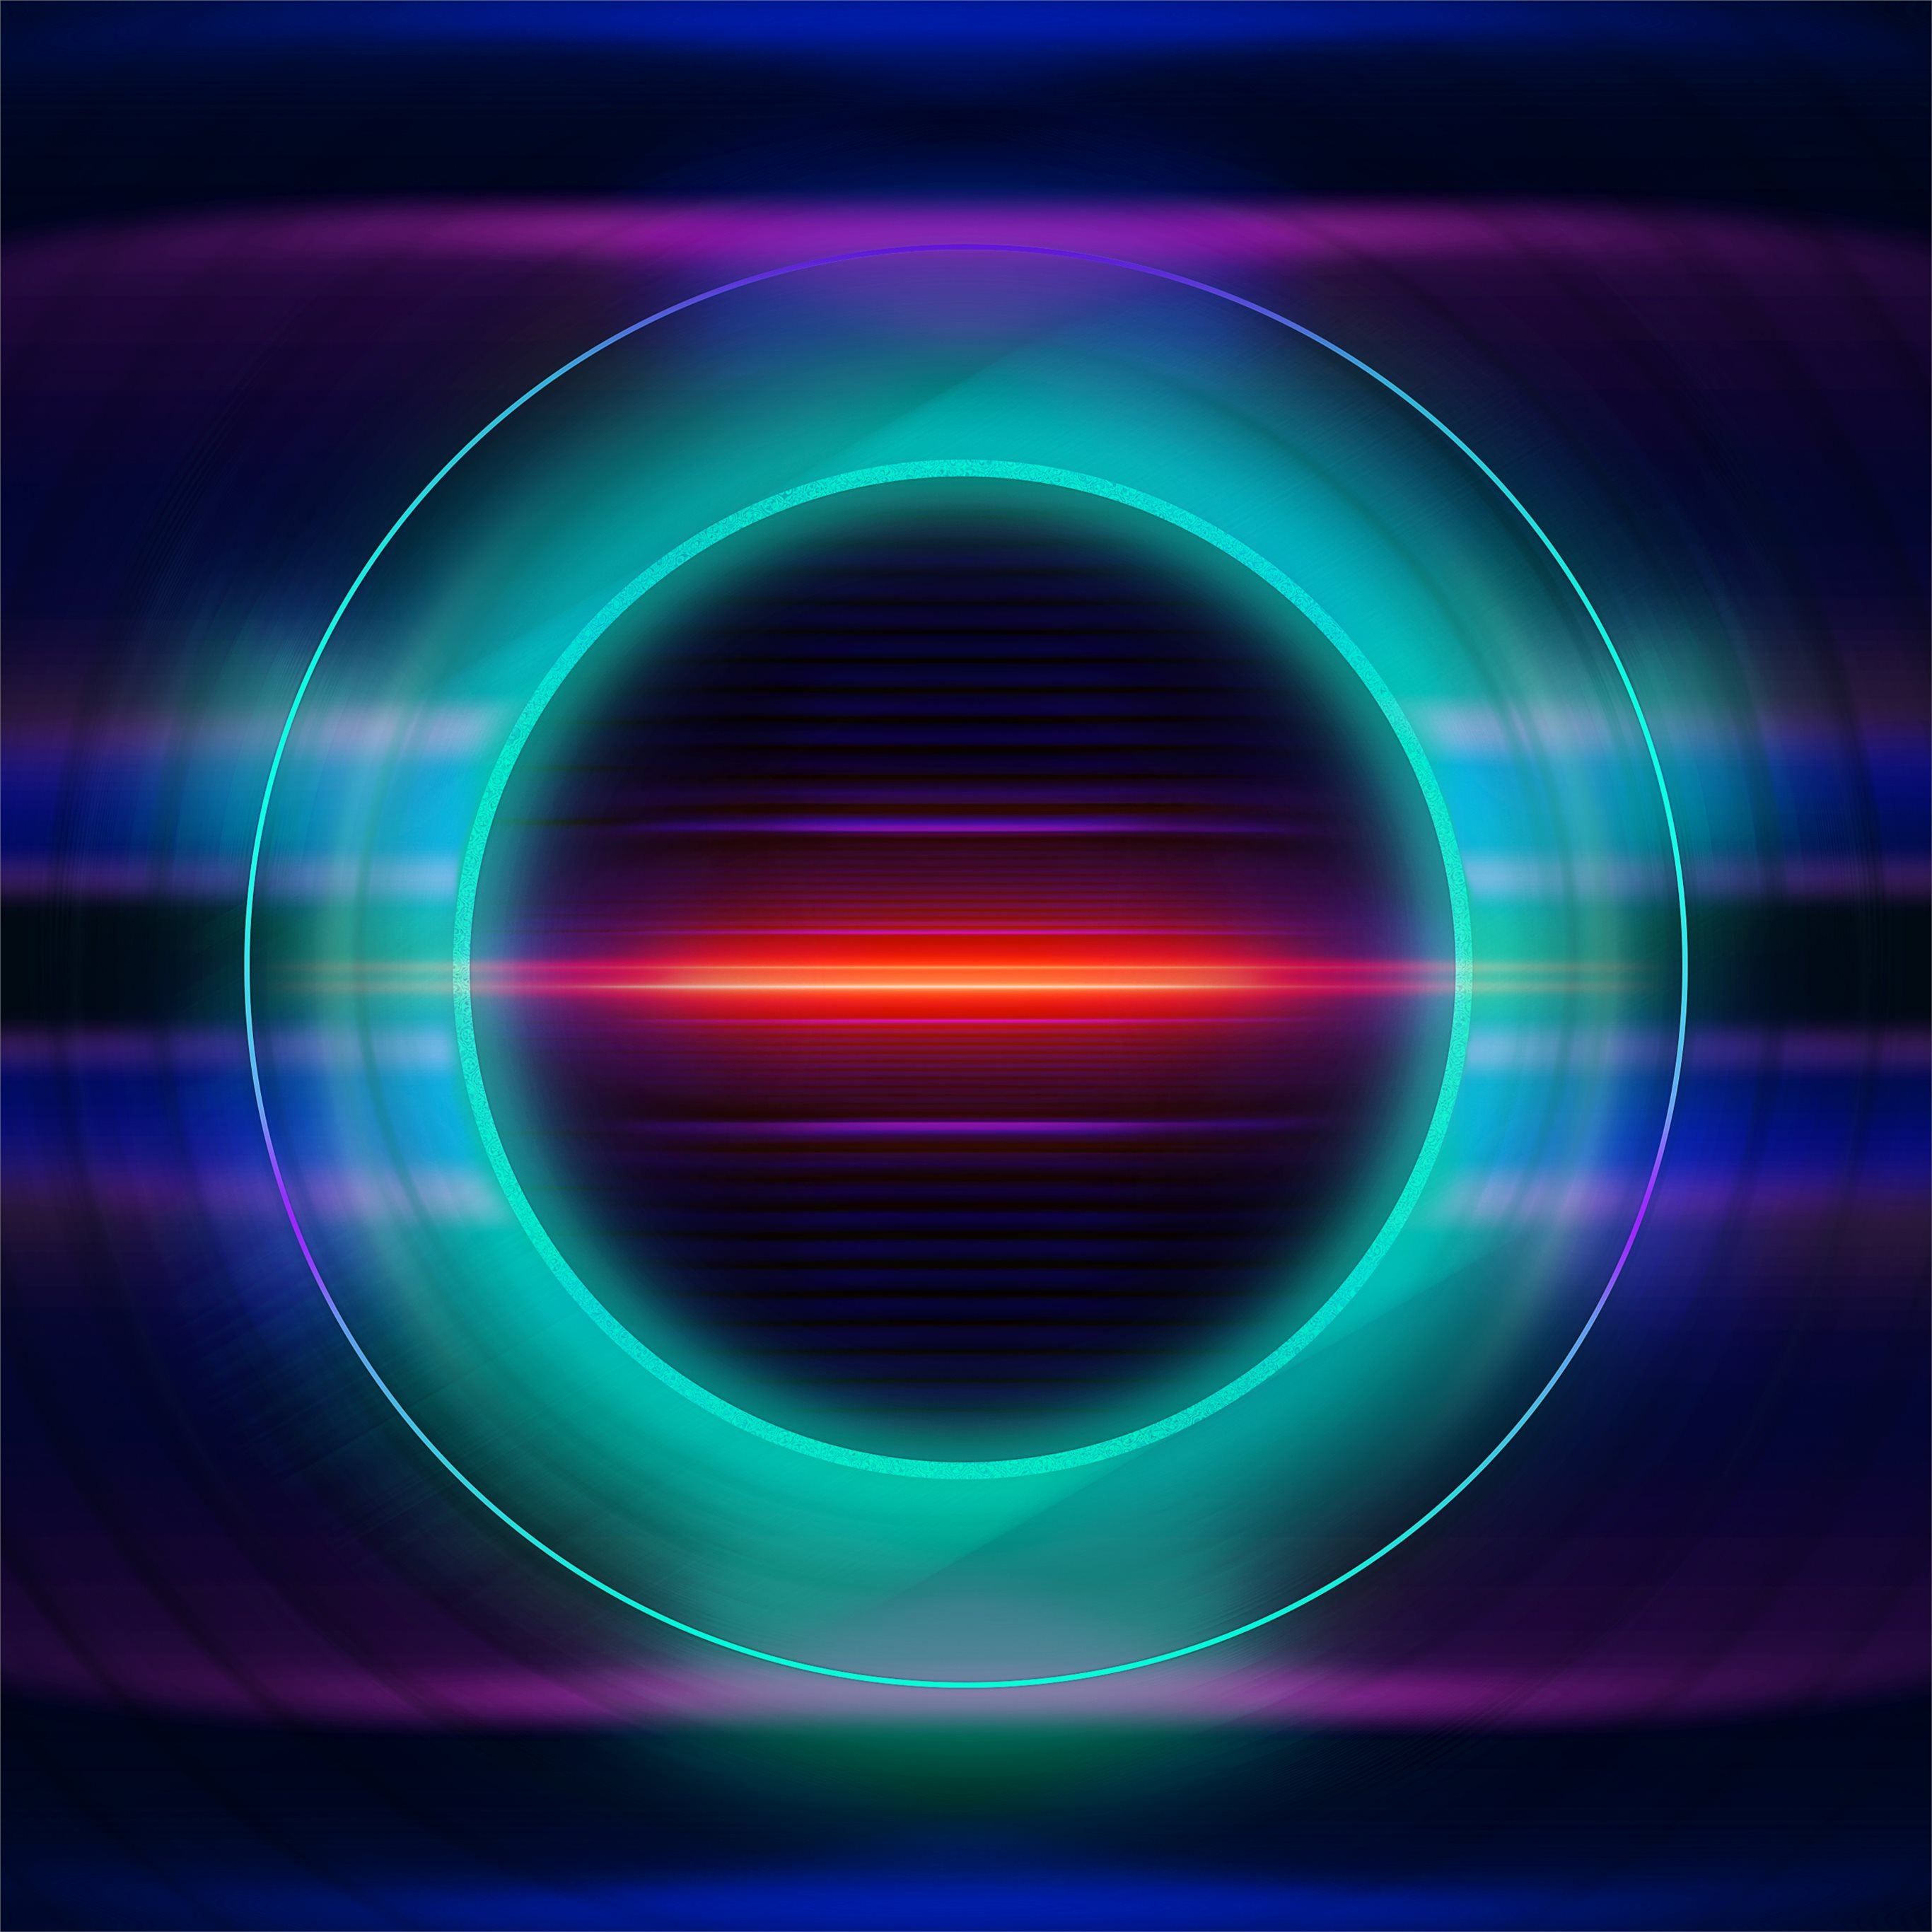 glowing circle abstract 5k iPad Pro Wallpaper Free Download